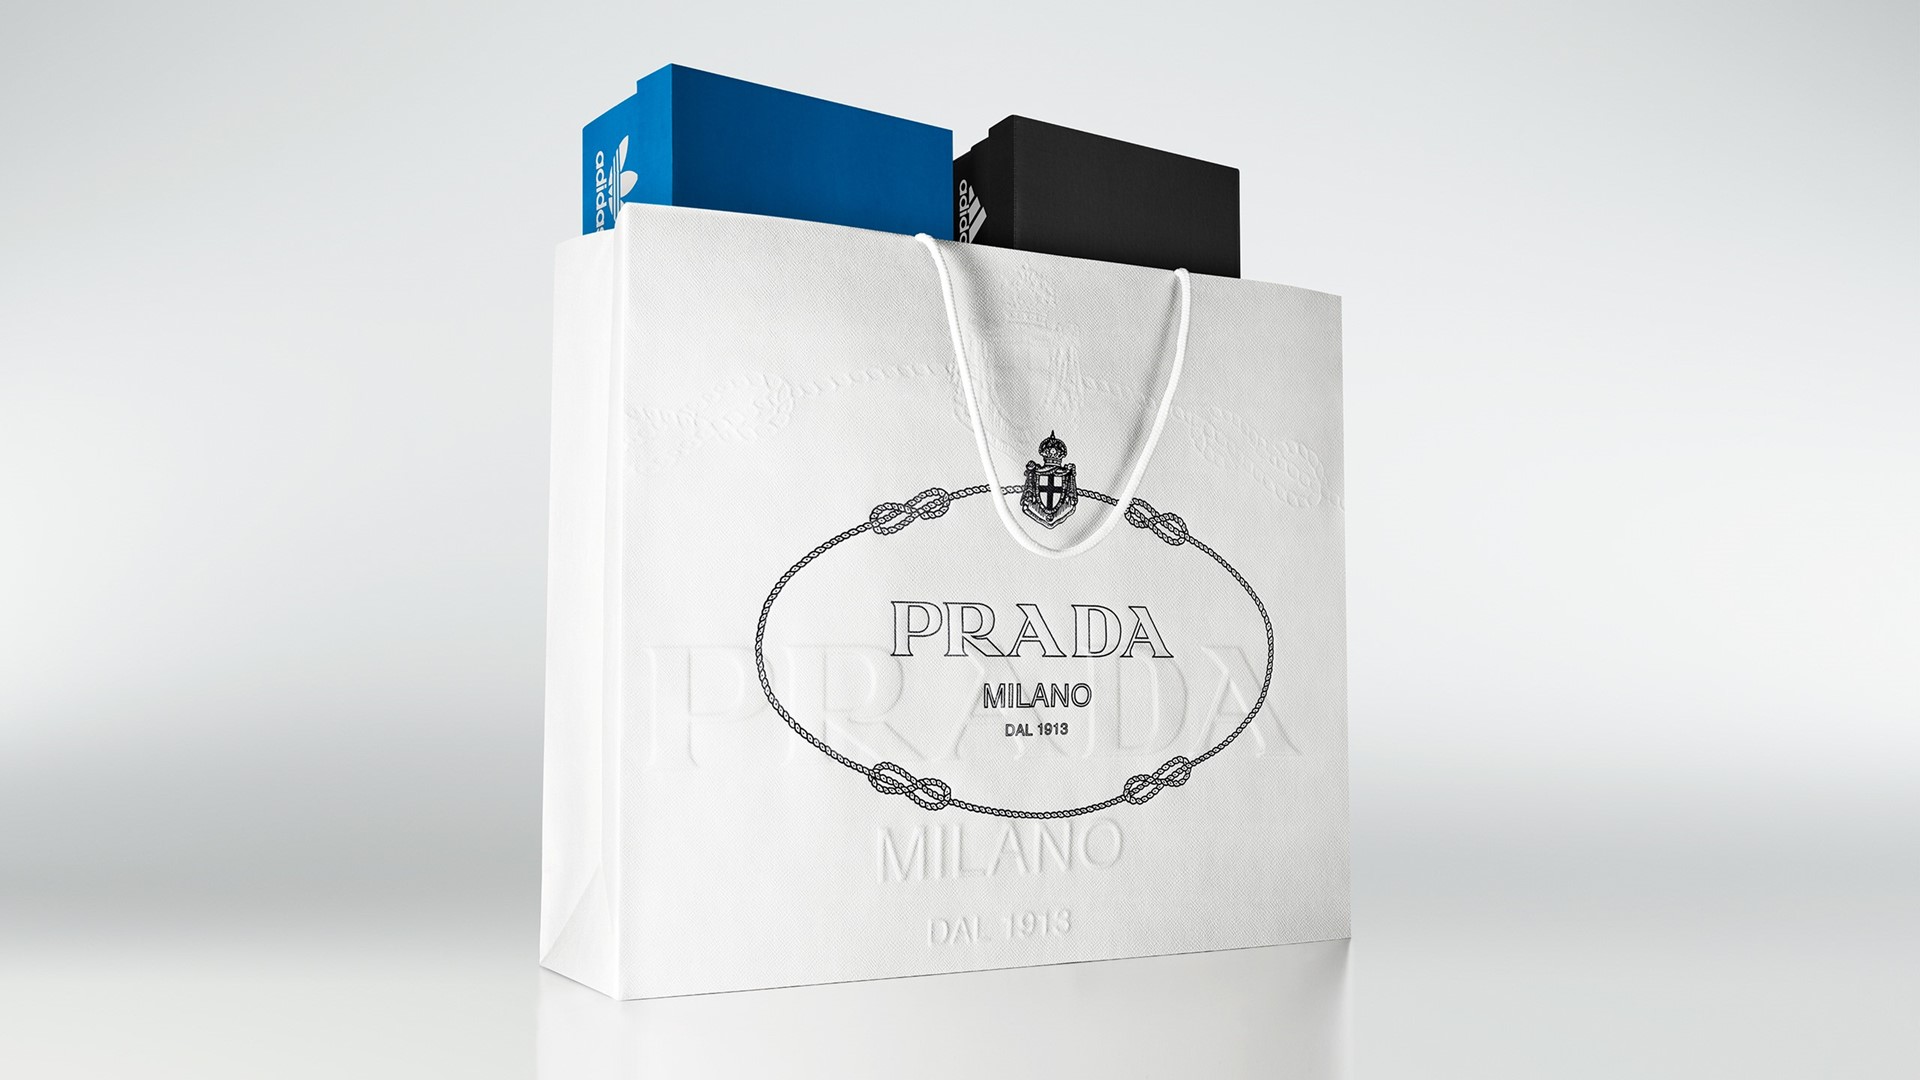 Where to Buy Prada x adidas Collaboration Dec 4